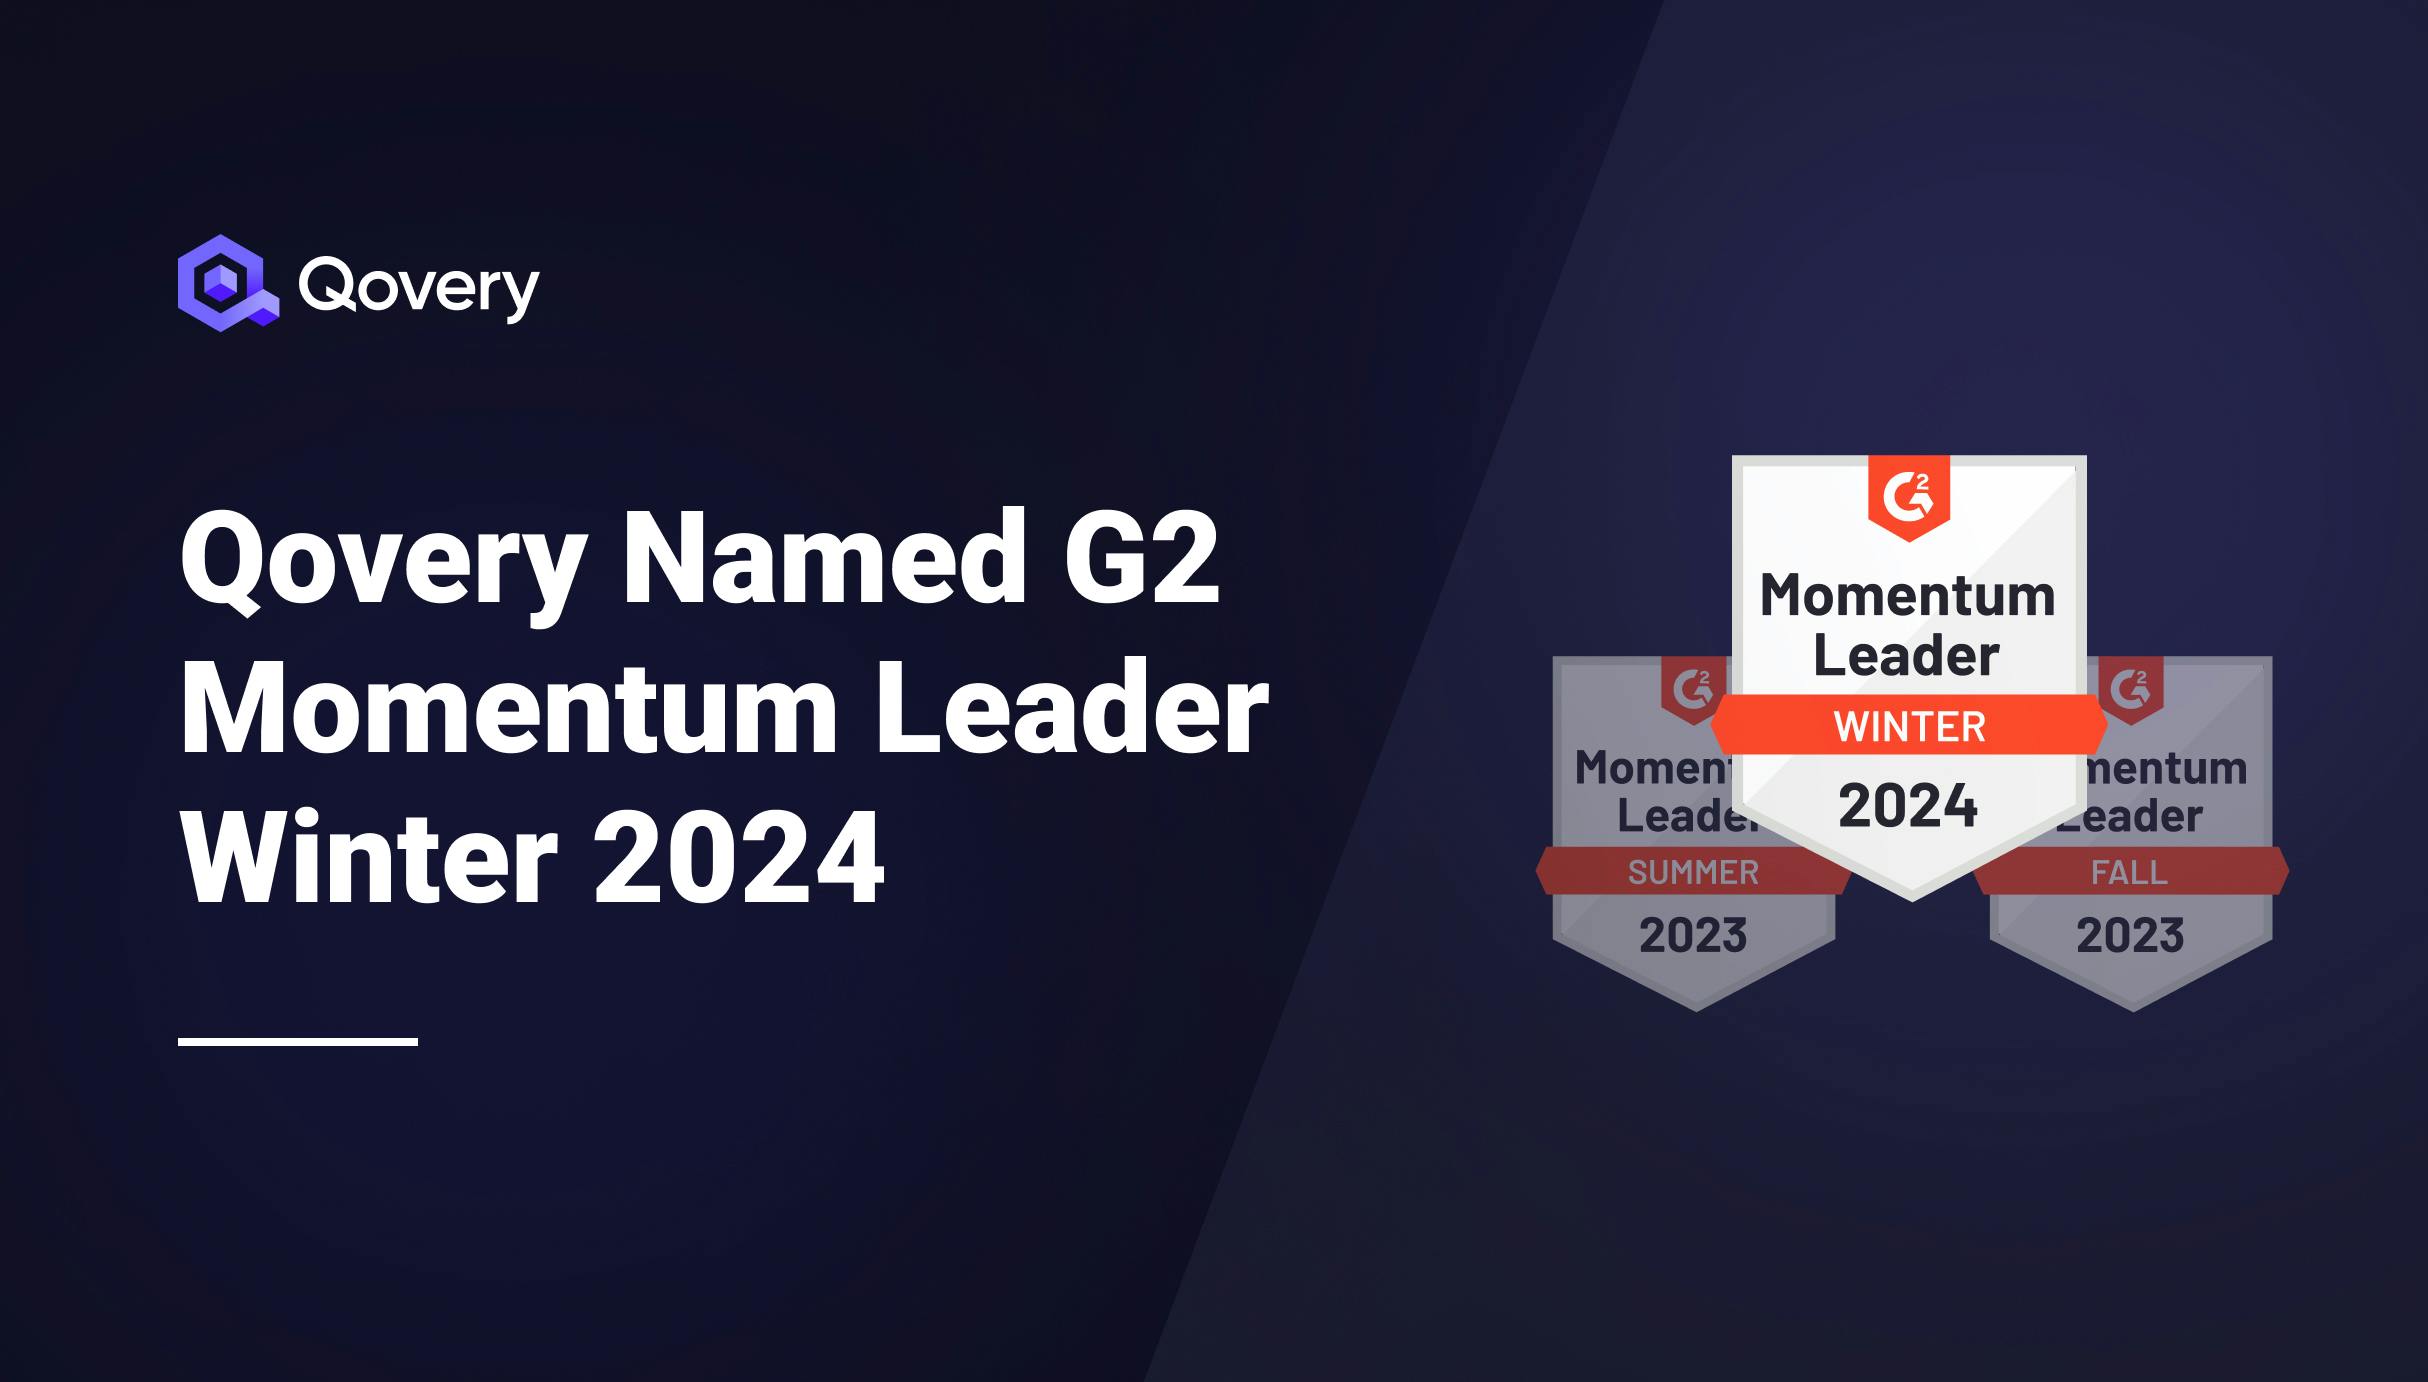 Qovery Named G2 Momentum Leader Winter 2024 - Qovery